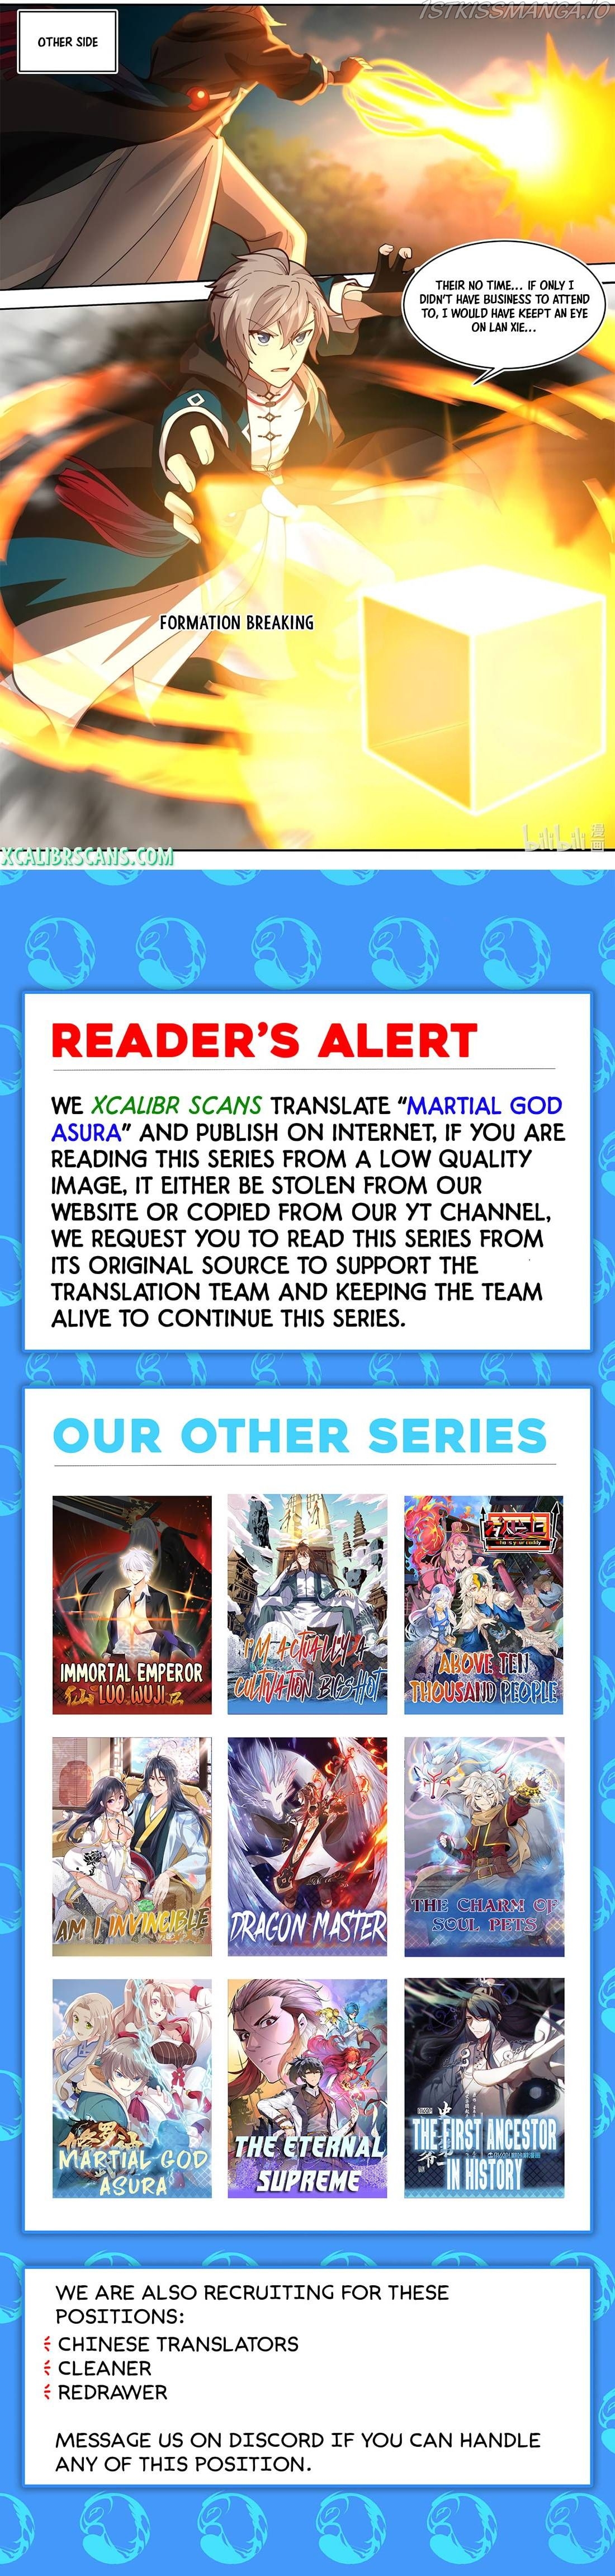 Martial God Asura Chapter 498 - Page 9